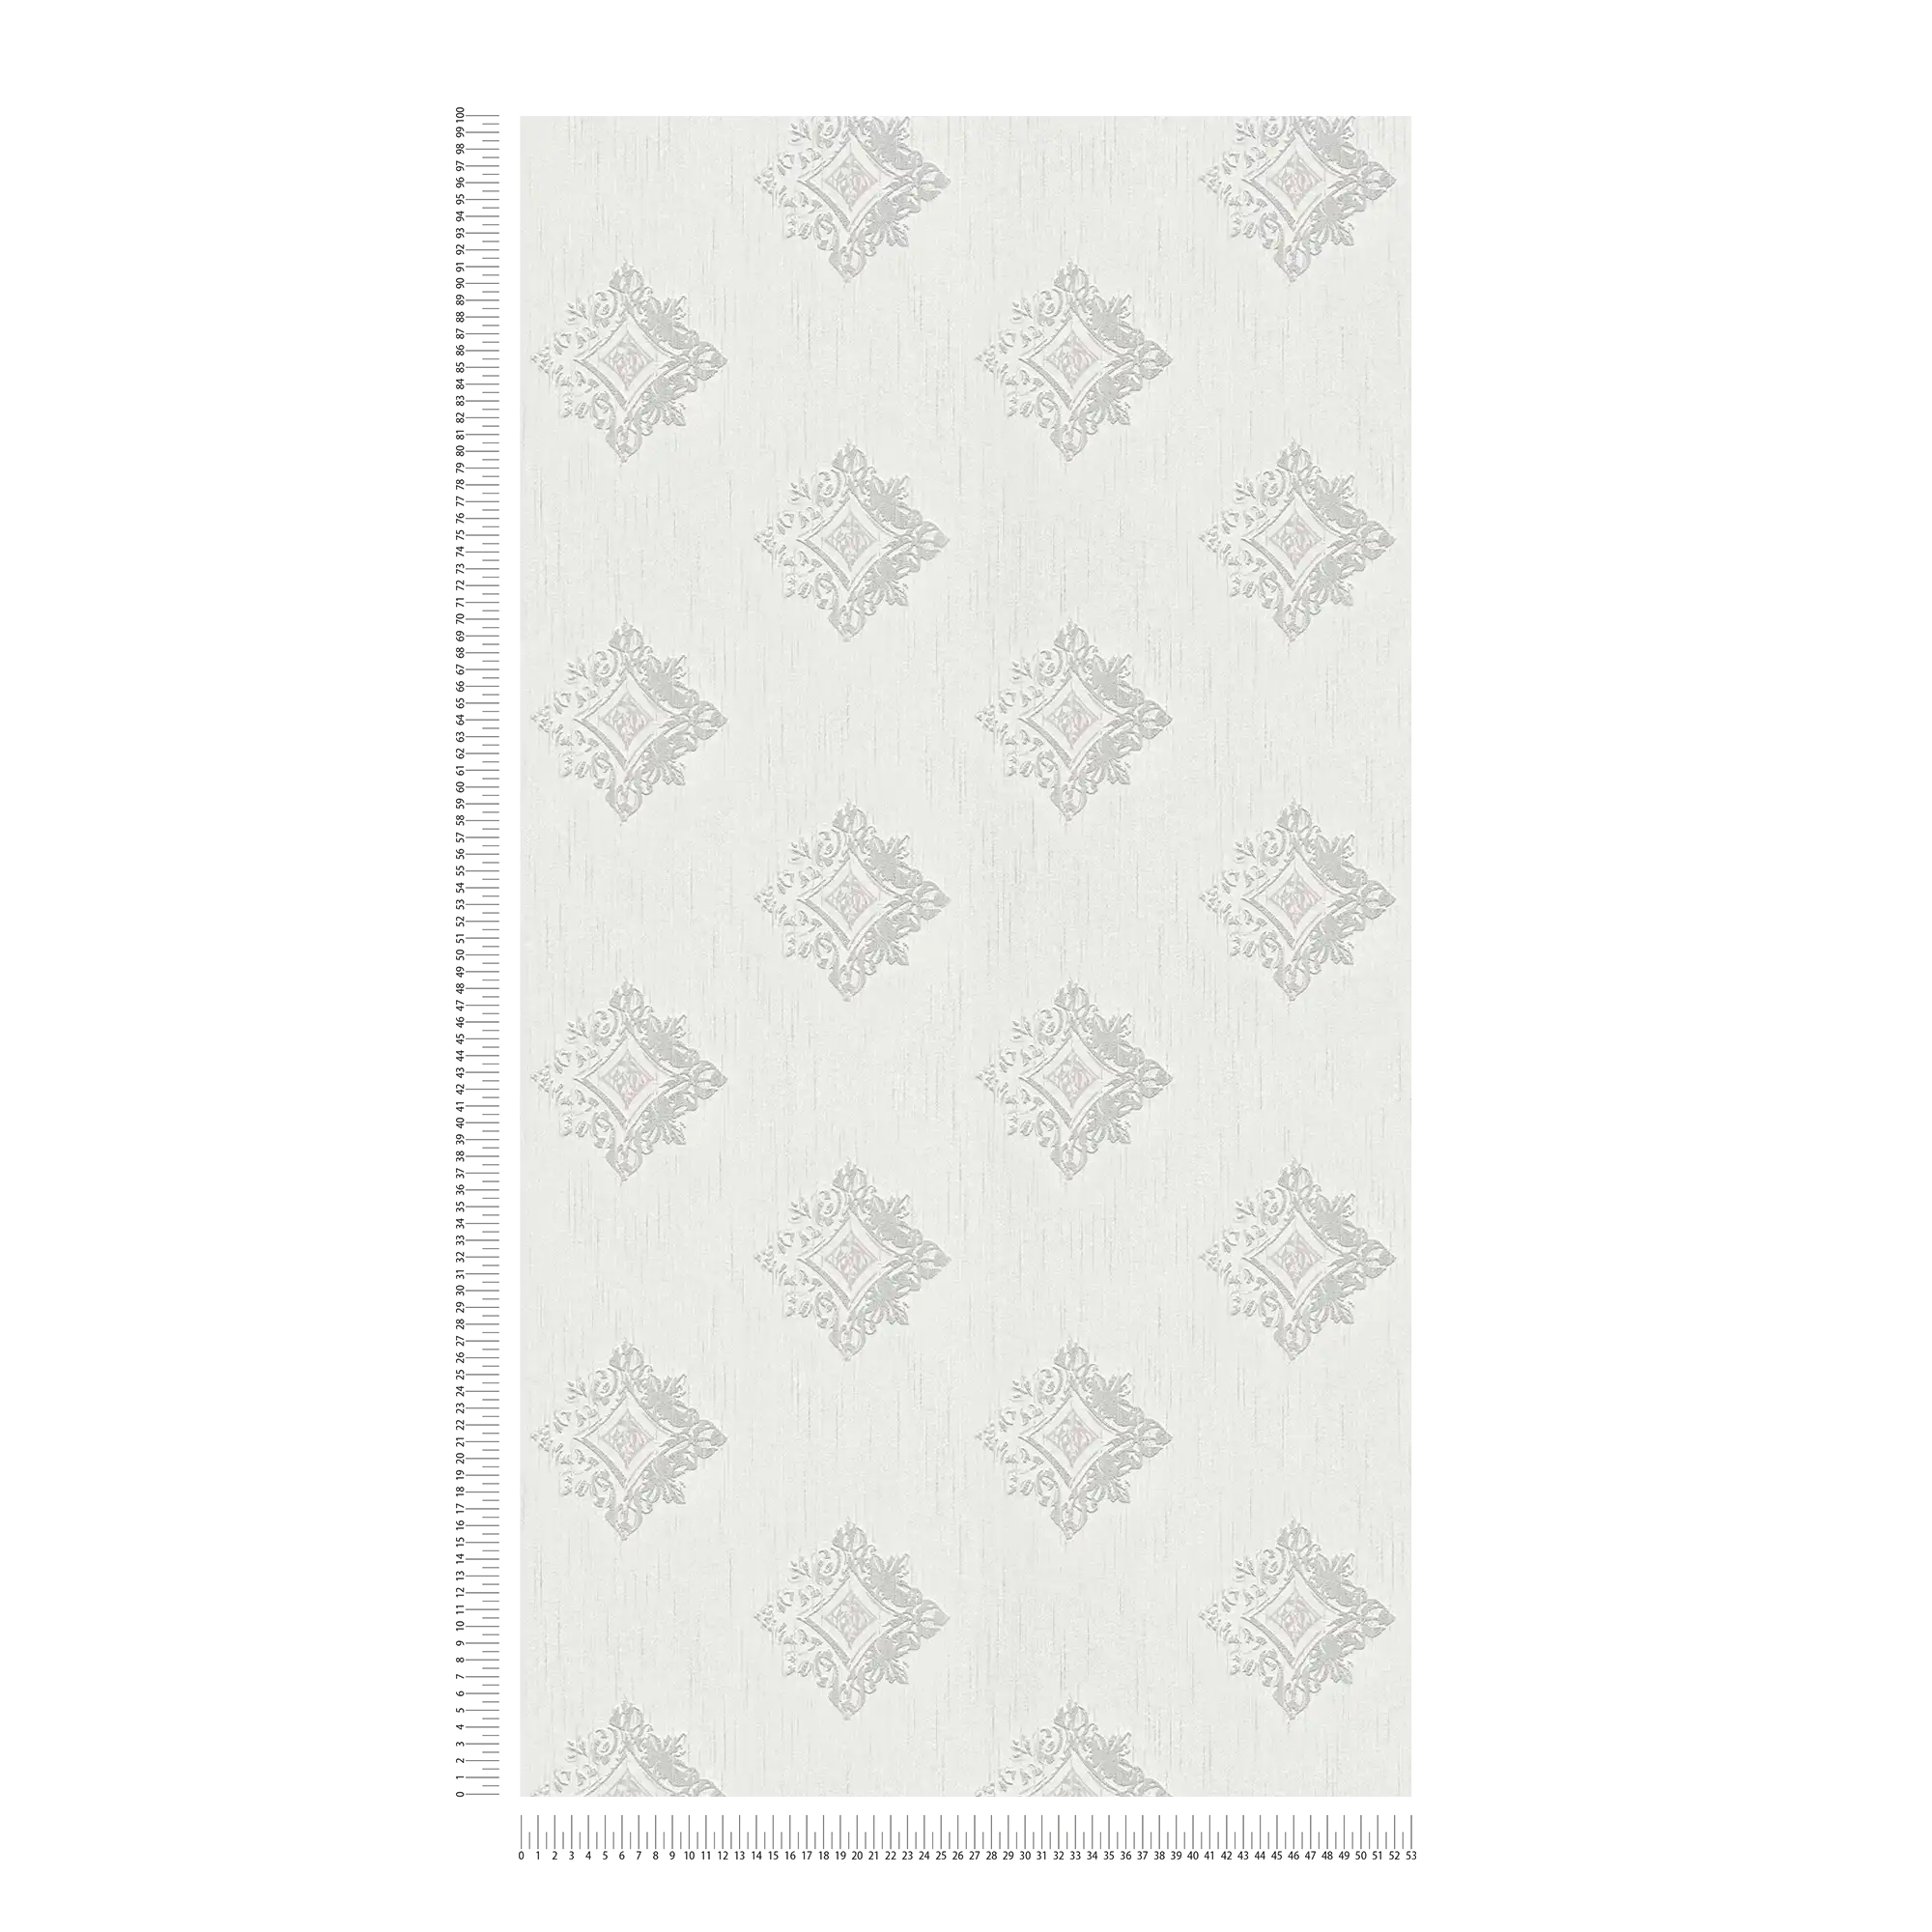             Non-woven wallpaper plaster look with stucco ornaments & diamonds pattern - grey, white
        